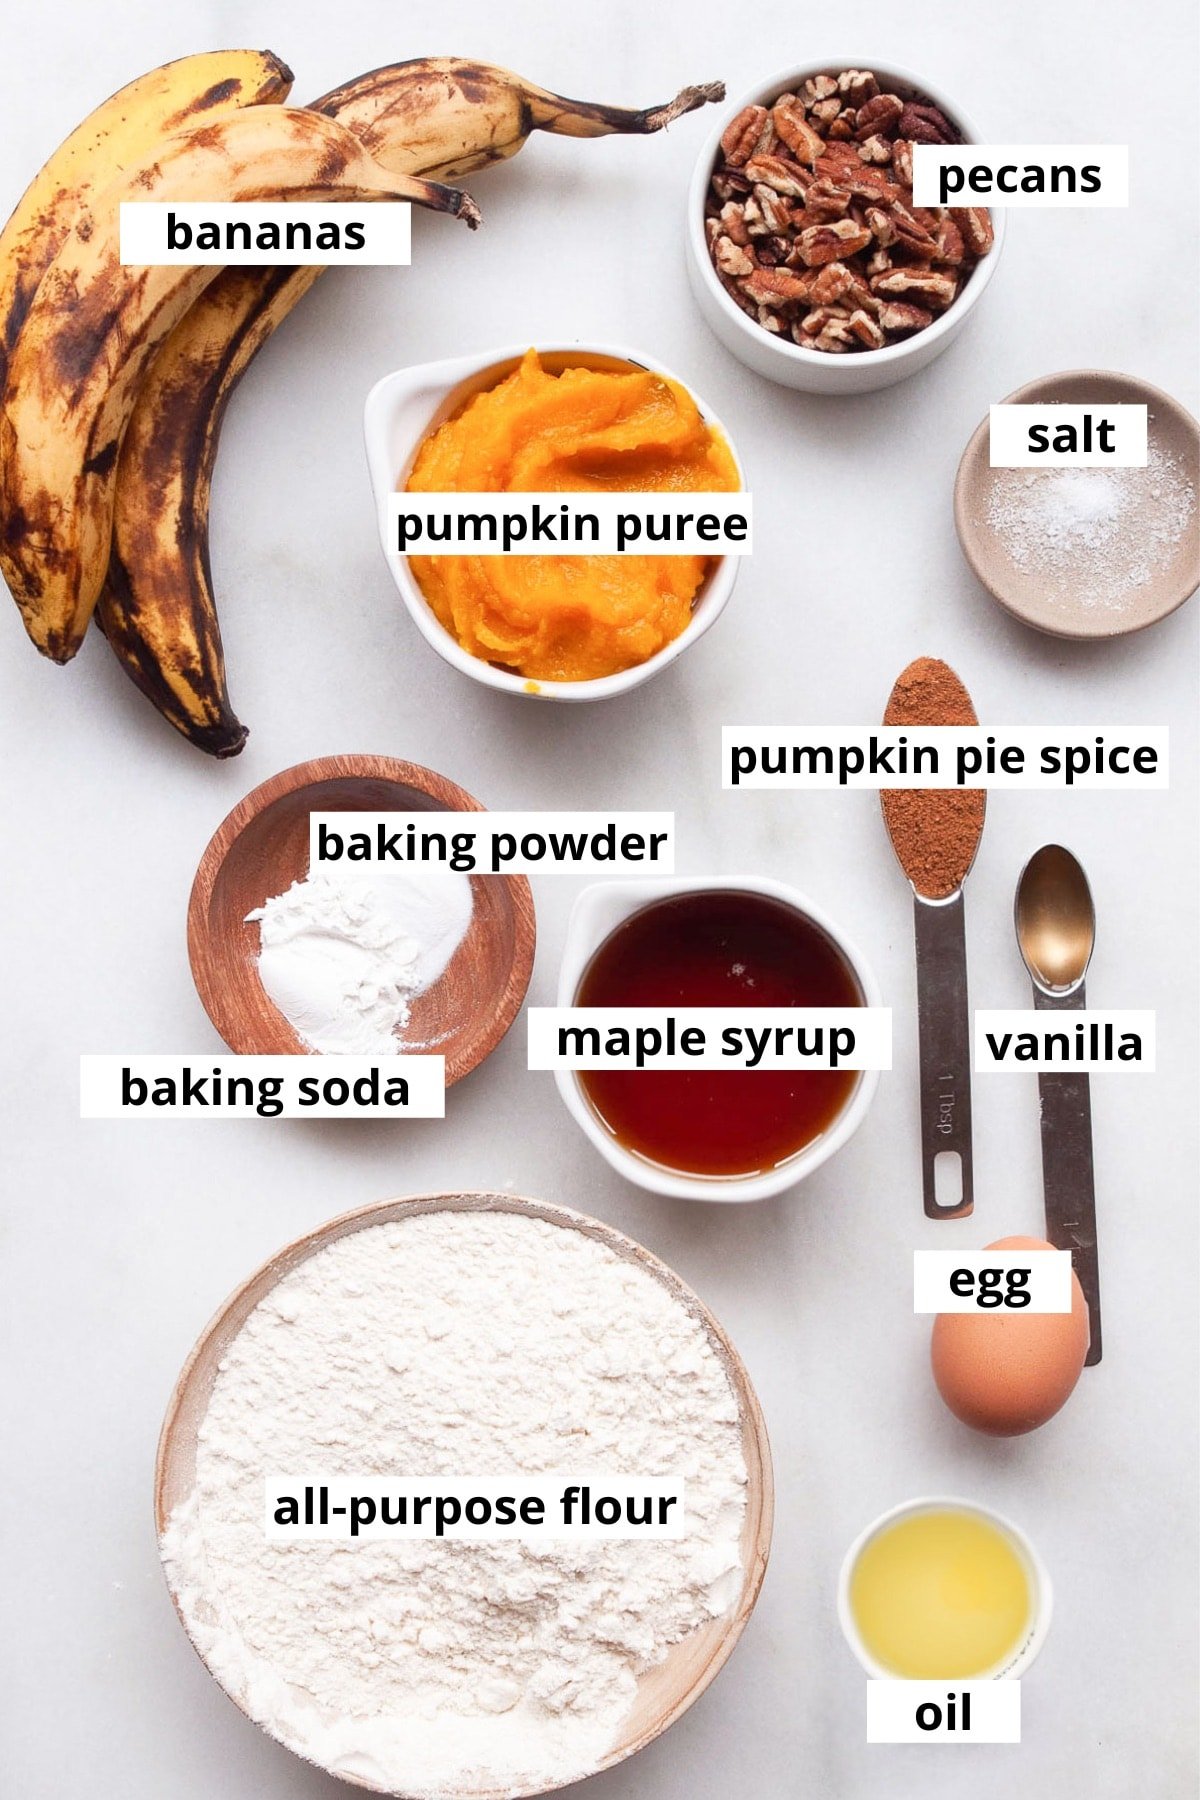 Bananas, pumpkin puree, pecans, egg, oil, pumpkin pie spice, vanilla, salt, baking powder, baking soda, egg, maple syrup, all purpose flour.